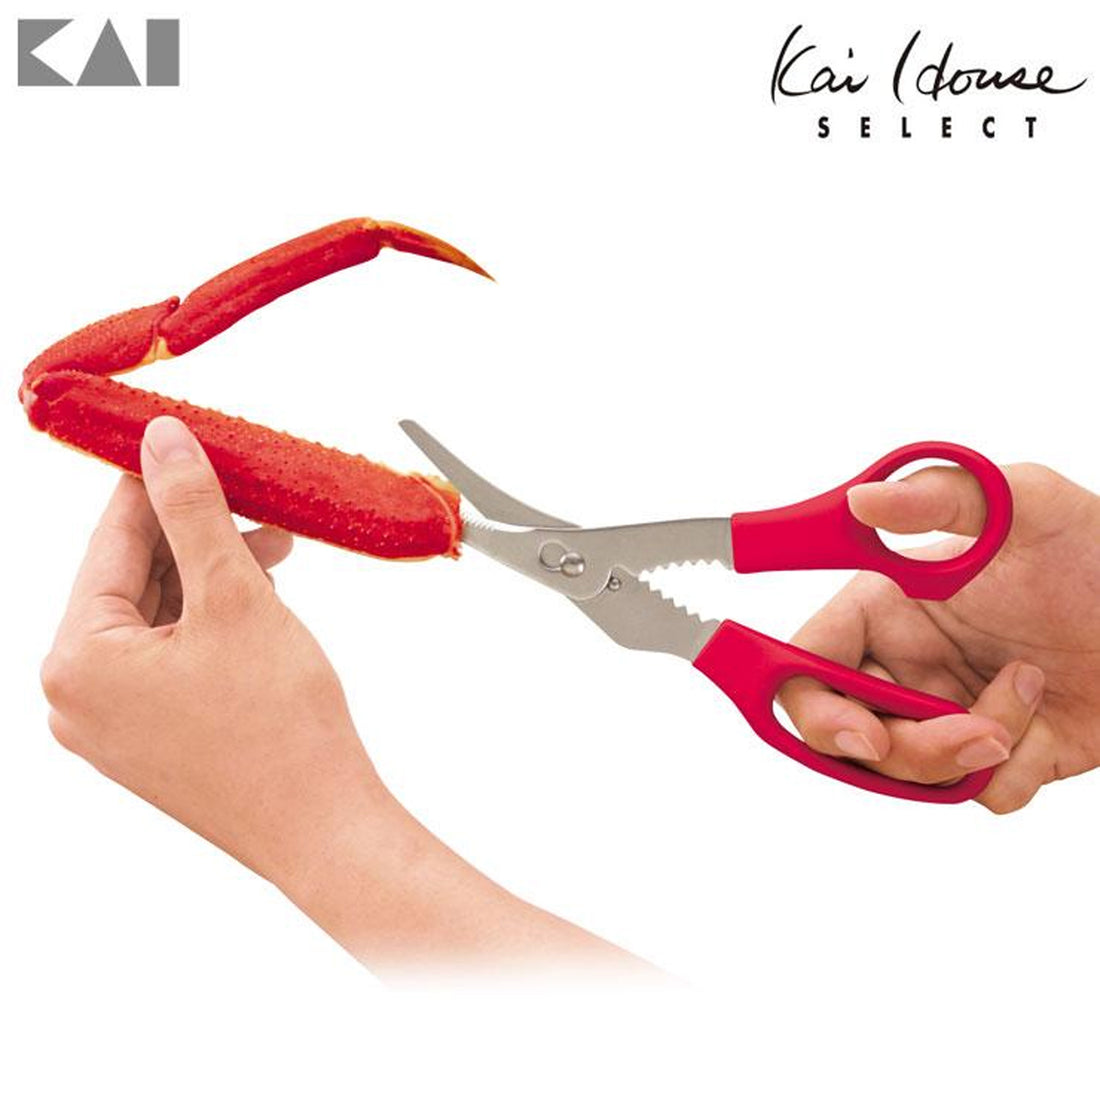 KAI Corporation DH7242 Kai House Select Crab Scissors